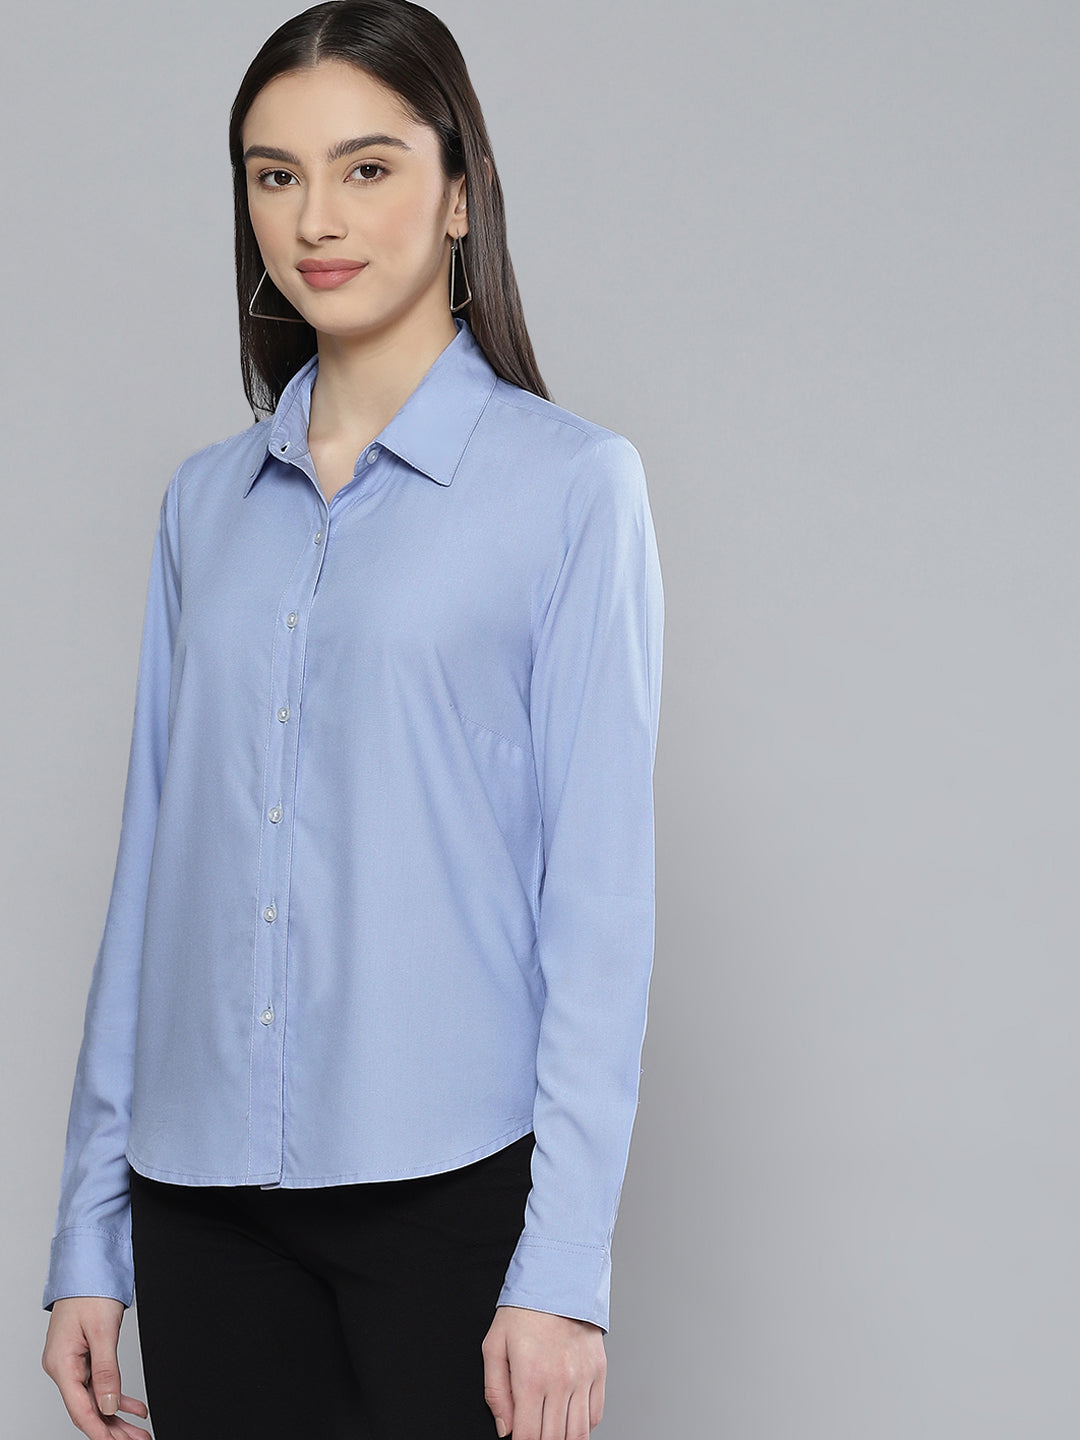 DENNISON Women Blue Solid Formal Shirt